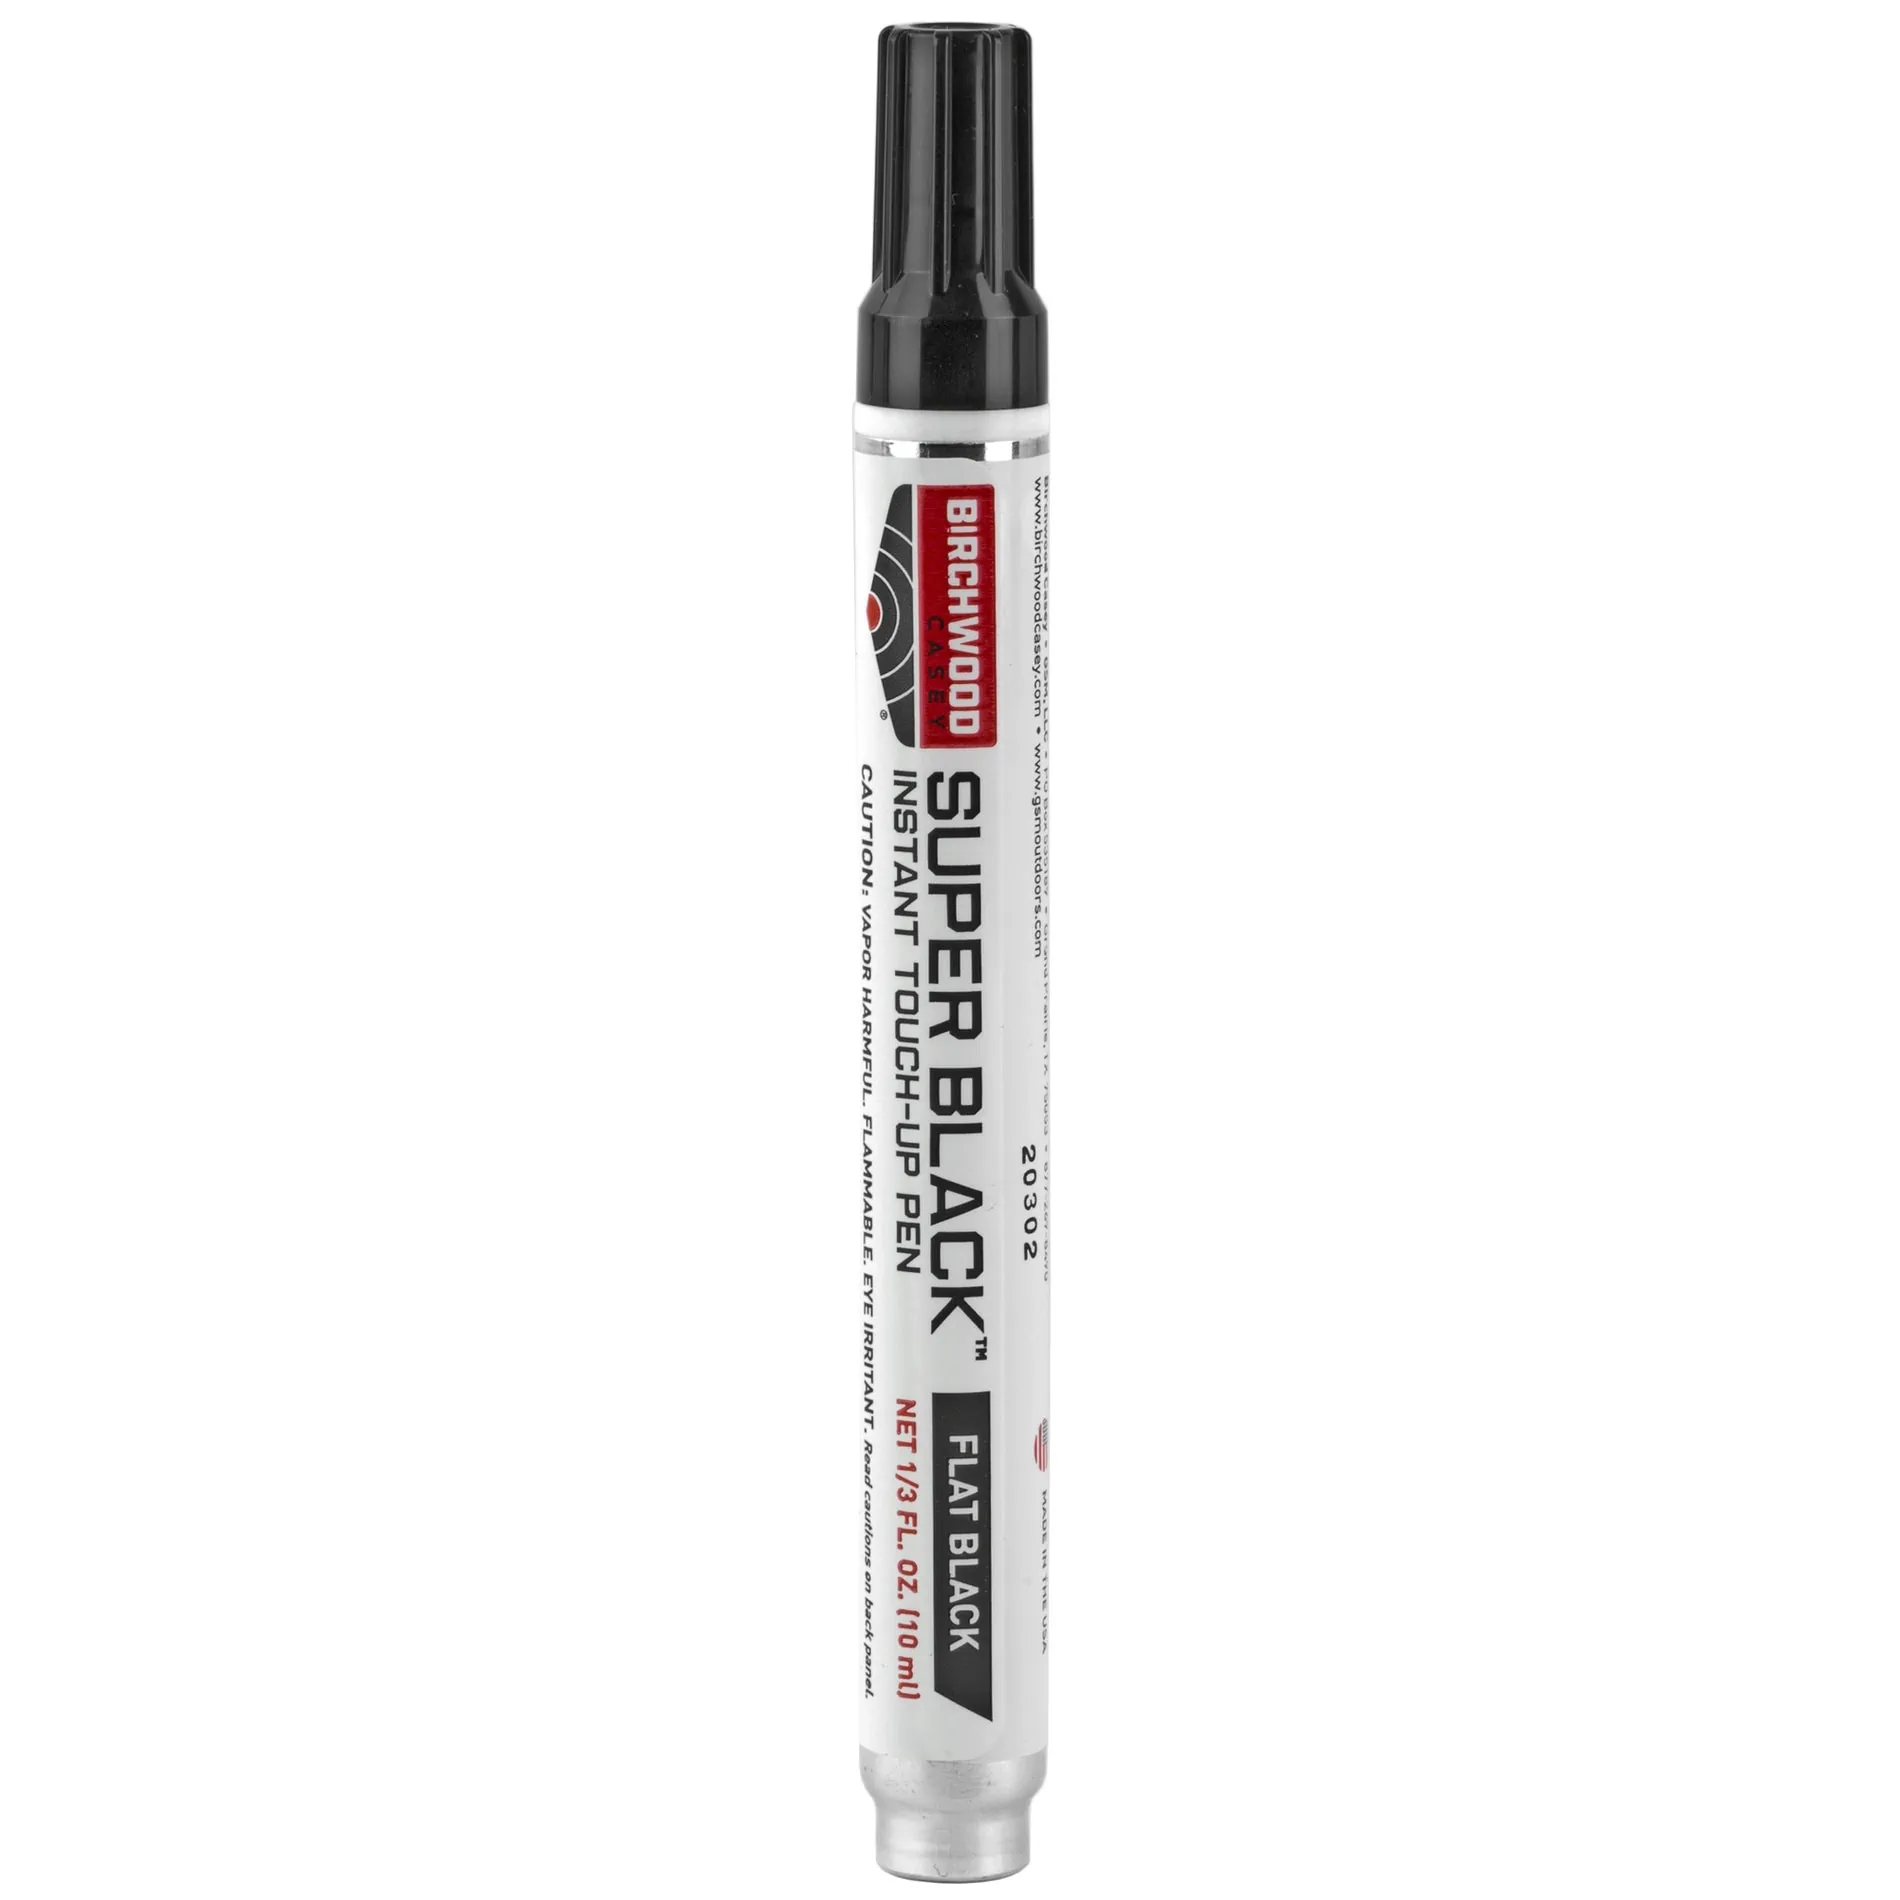 Birchwood Casey Super Black Instant Touch-Up Pen